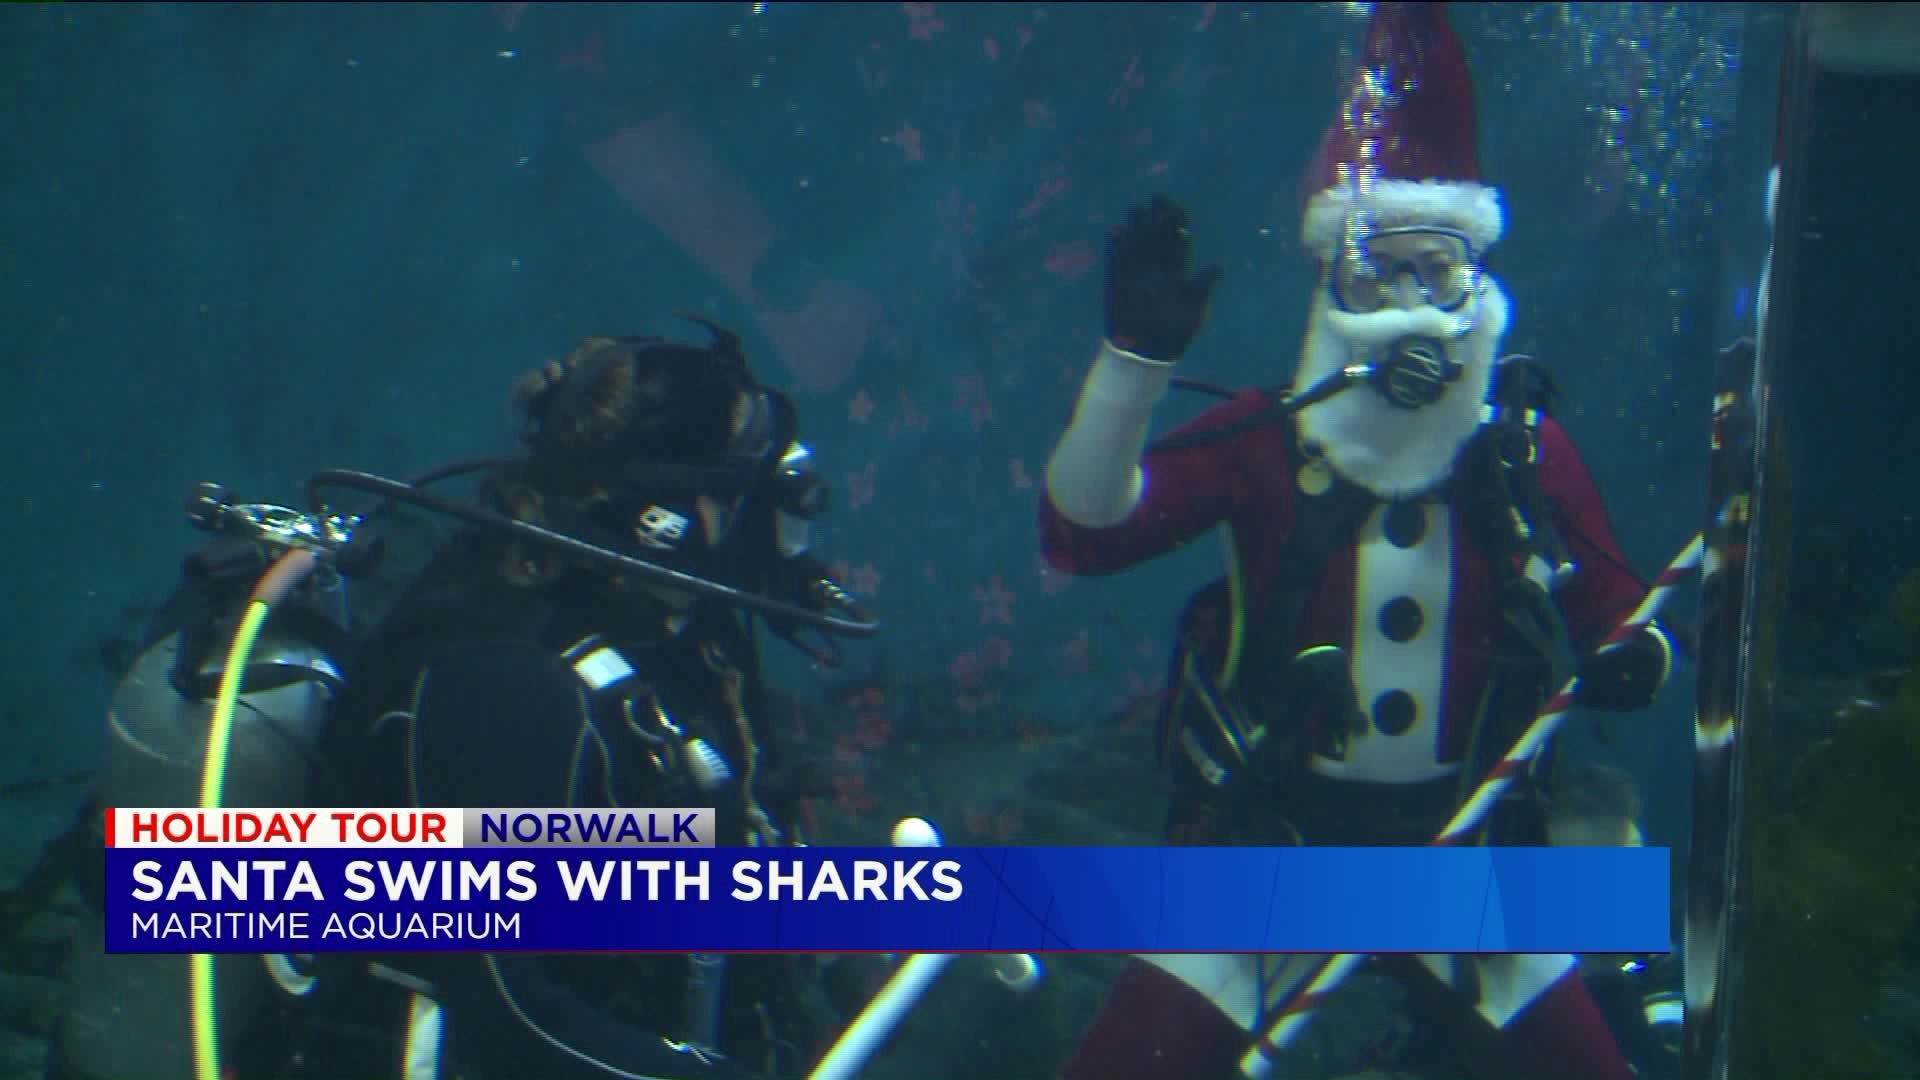 Santa swims with sharks at maritime aquarium in Norwalk